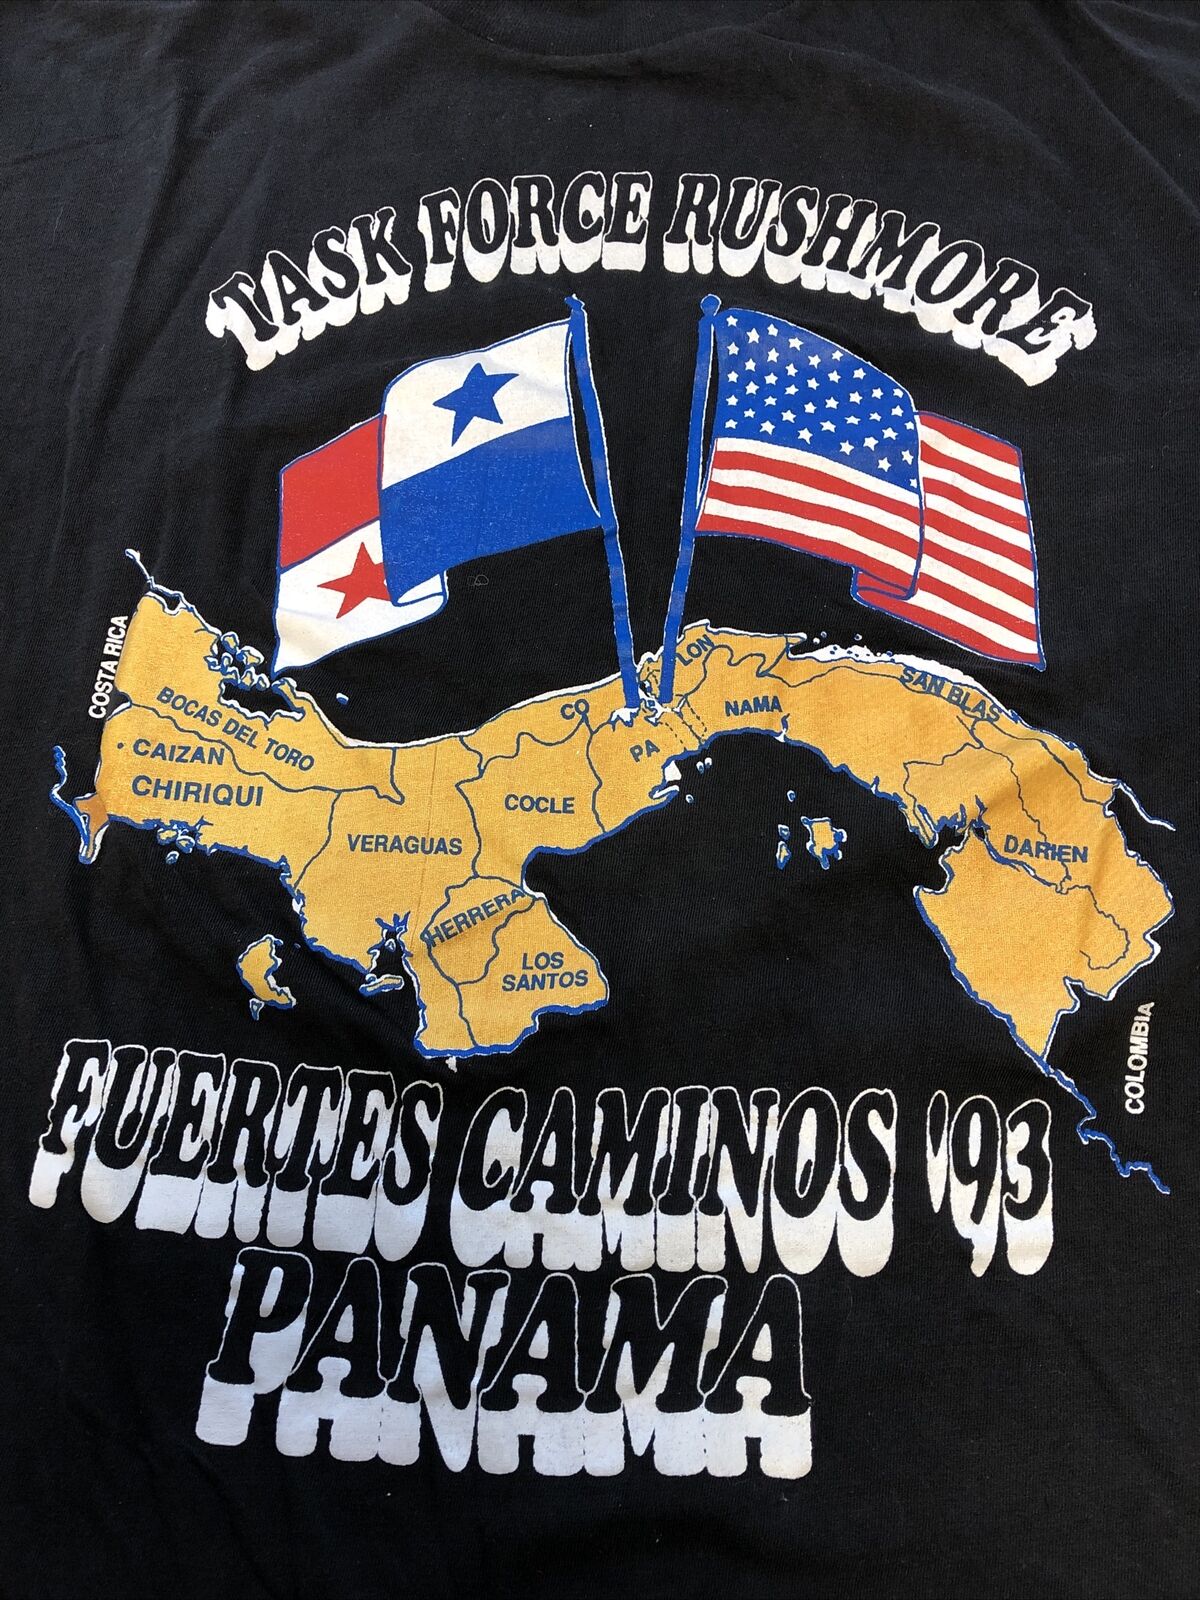 Vtg 1993 Panama Task Force Rushmore Fuertes Caminos Single Stitch T Shirt M Army